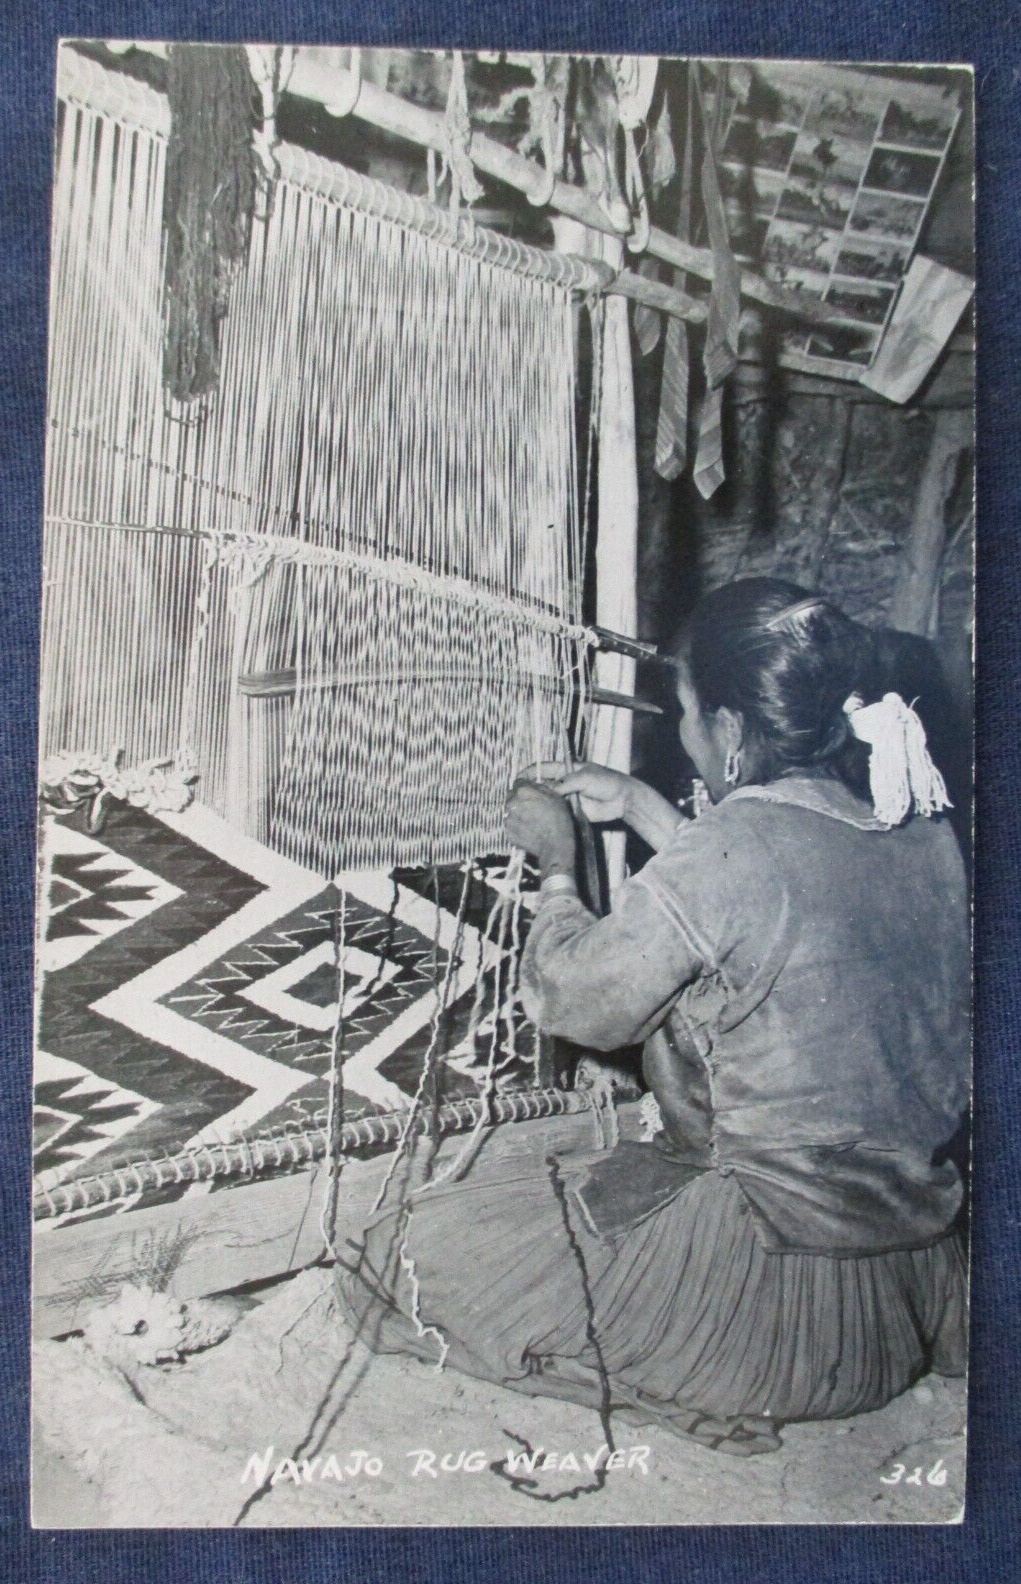 RP Navajo Indian Rug Weaver 1940s Postcard by Camera Shop Albuquerque New Mexico